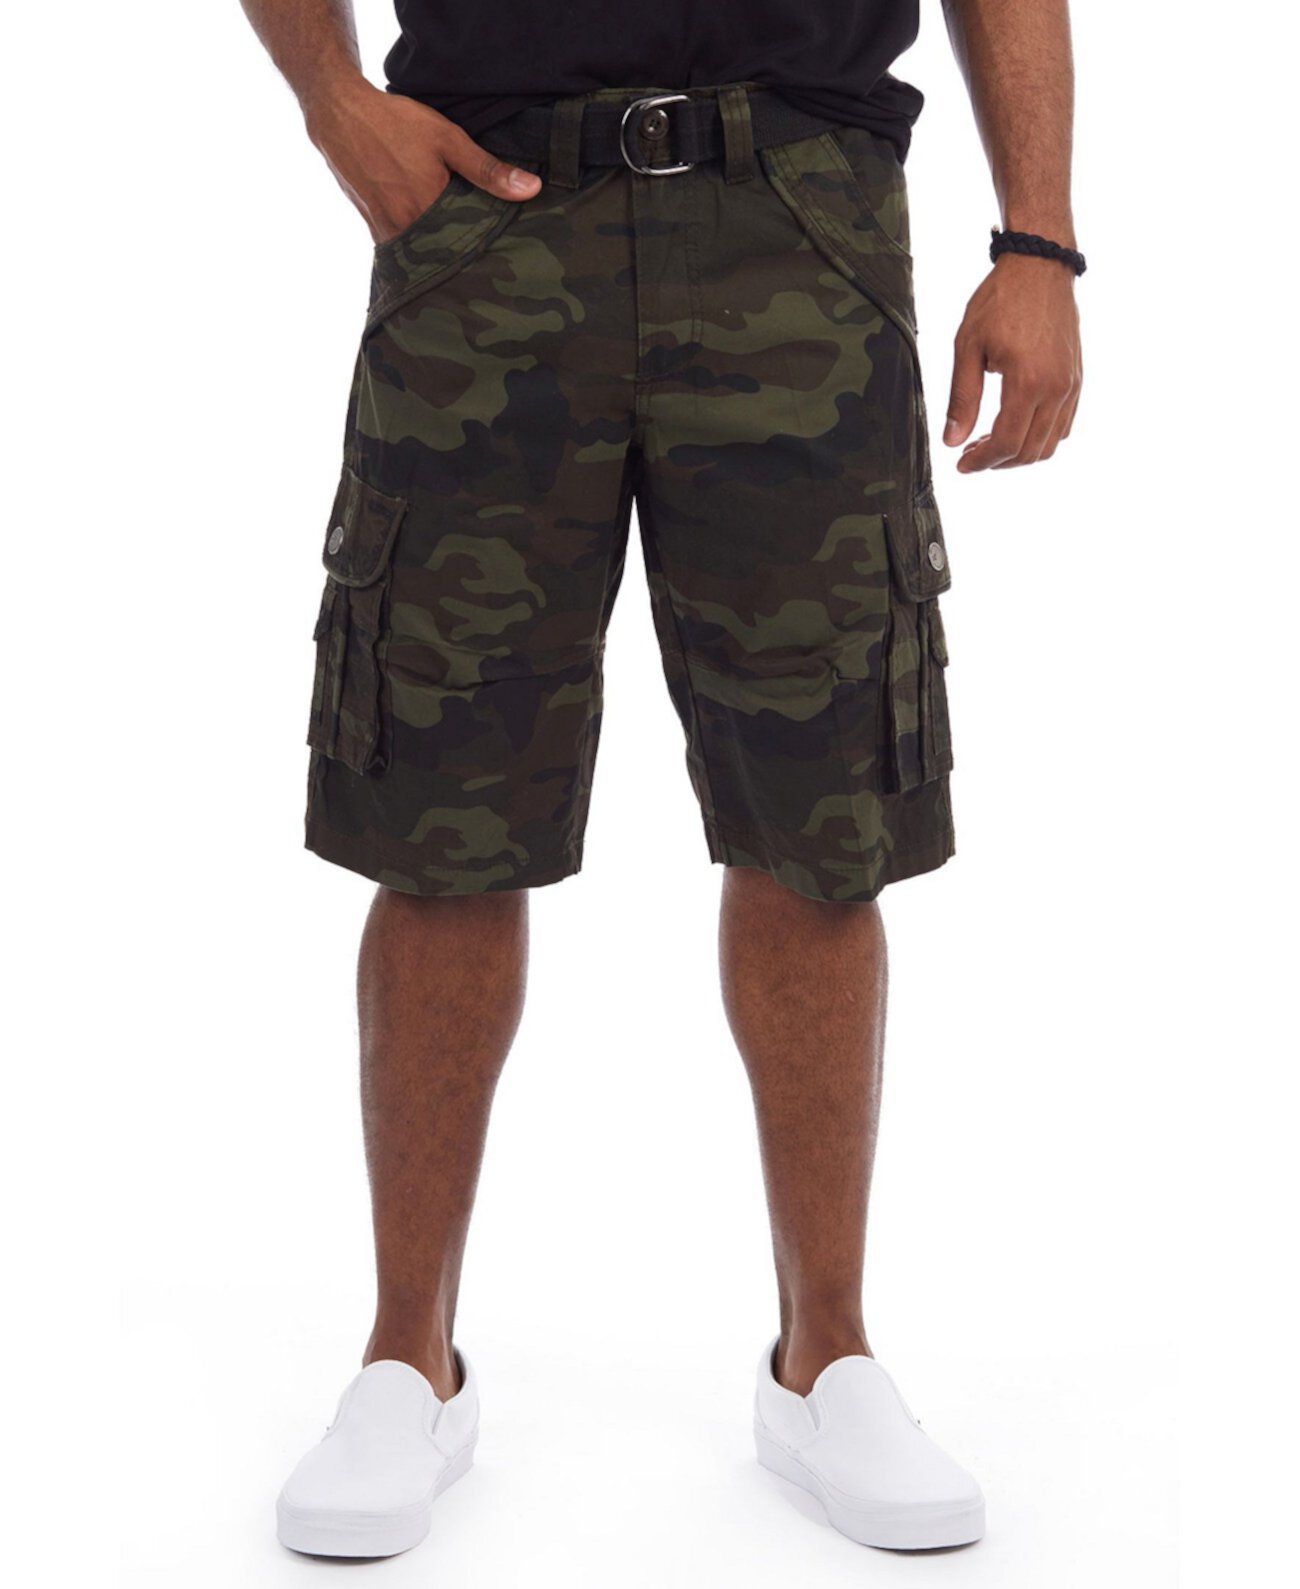 Мужские шорты-карманы с двумя карманами на ремне X-Ray